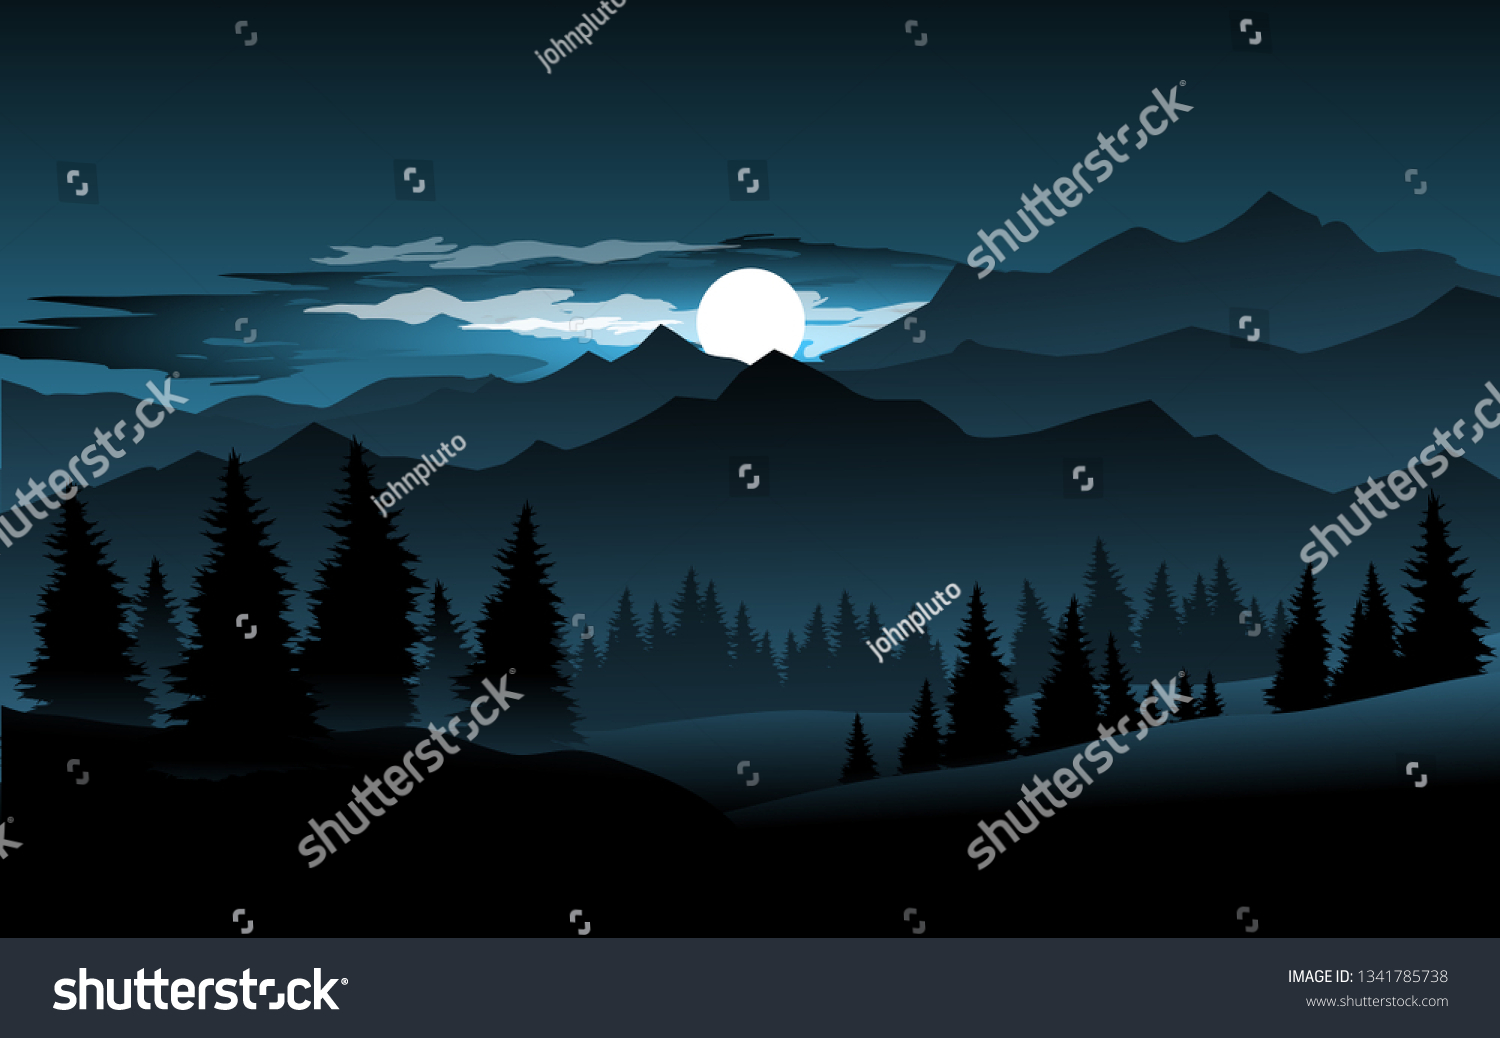 27,273 Moonlight mountains Images, Stock Photos & Vectors | Shutterstock